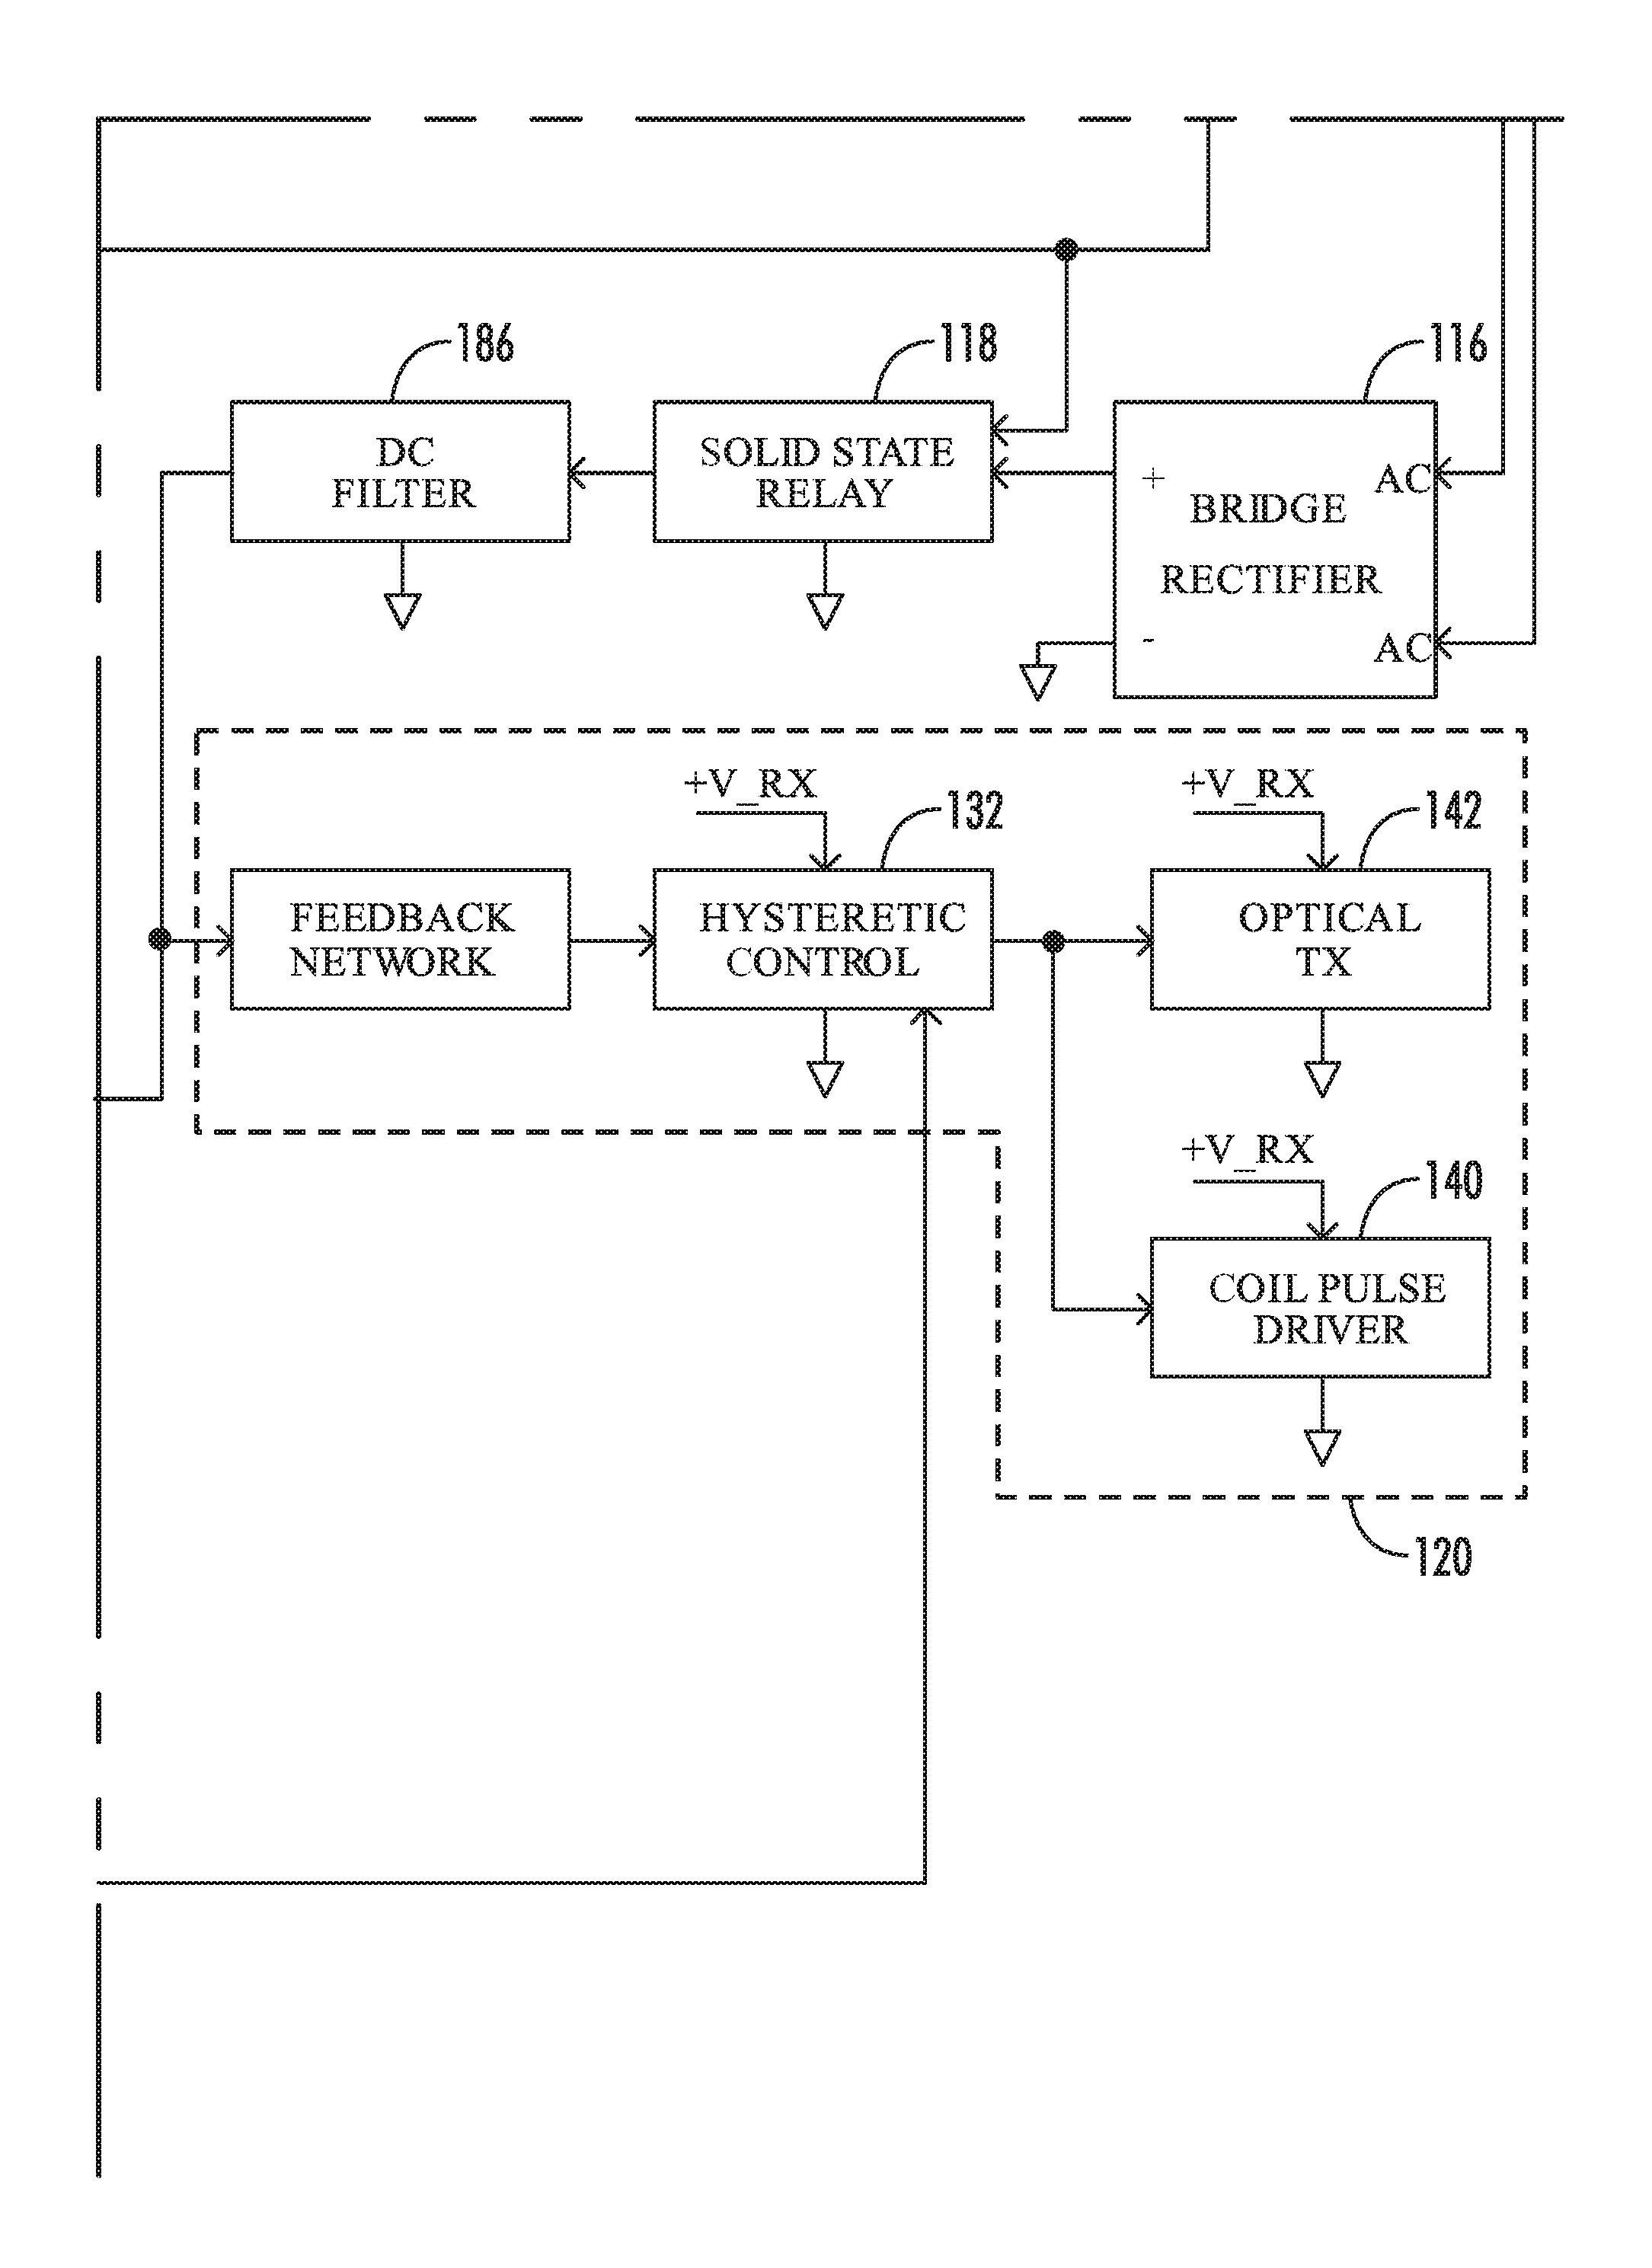 Proximity wireless power system using a bidirectional power converter